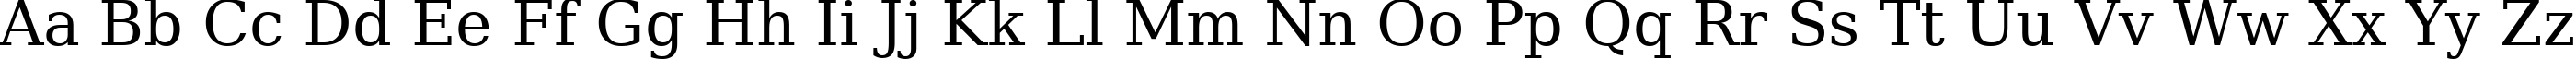 Пример написания английского алфавита шрифтом ae_Metal